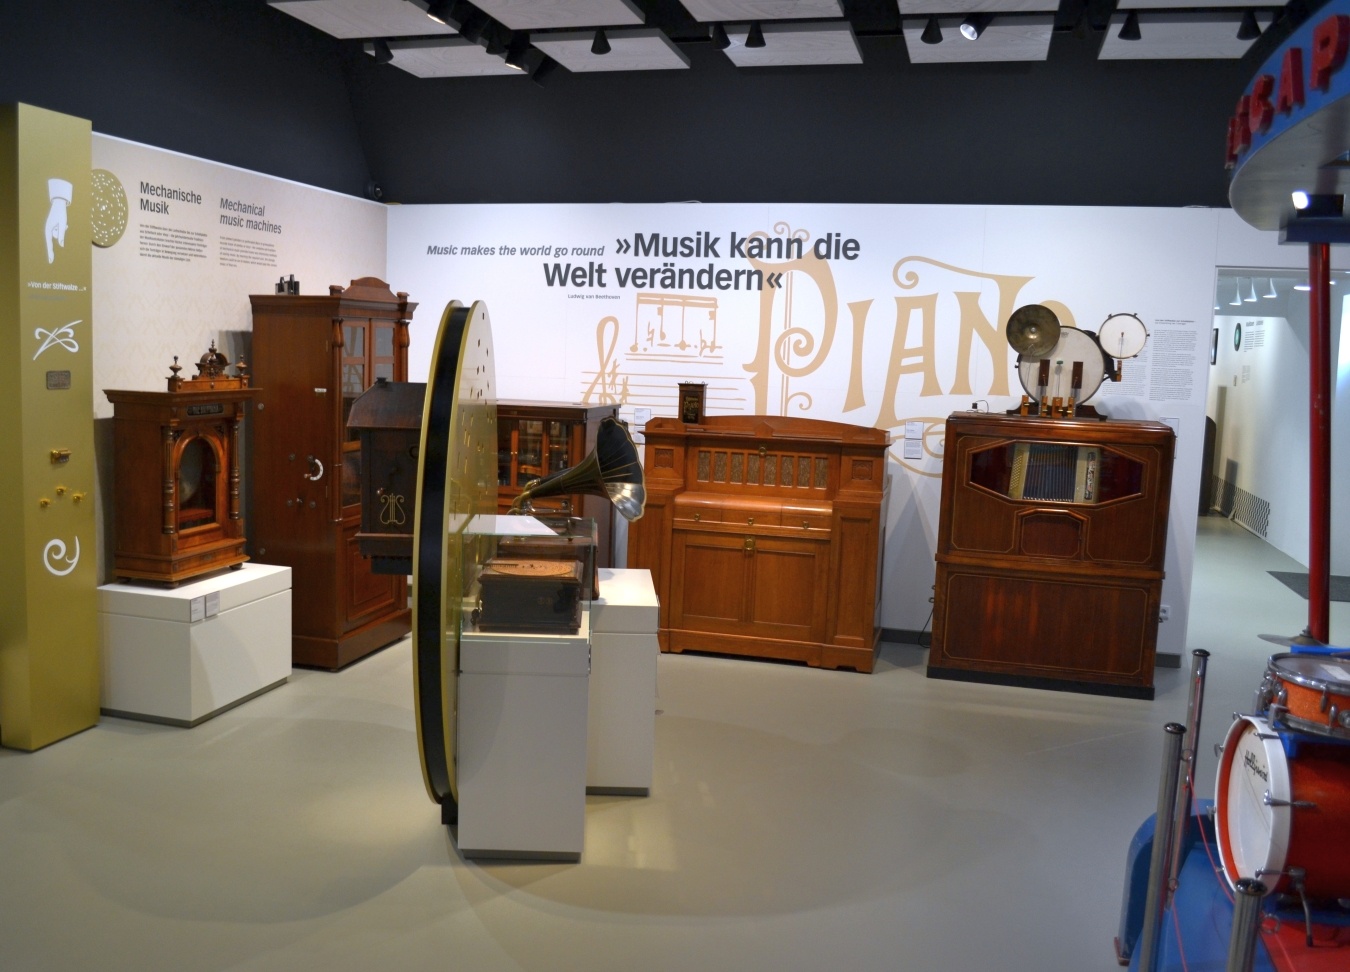 Deutsches Automatenmuseum Espelkamp - mechanische Musik